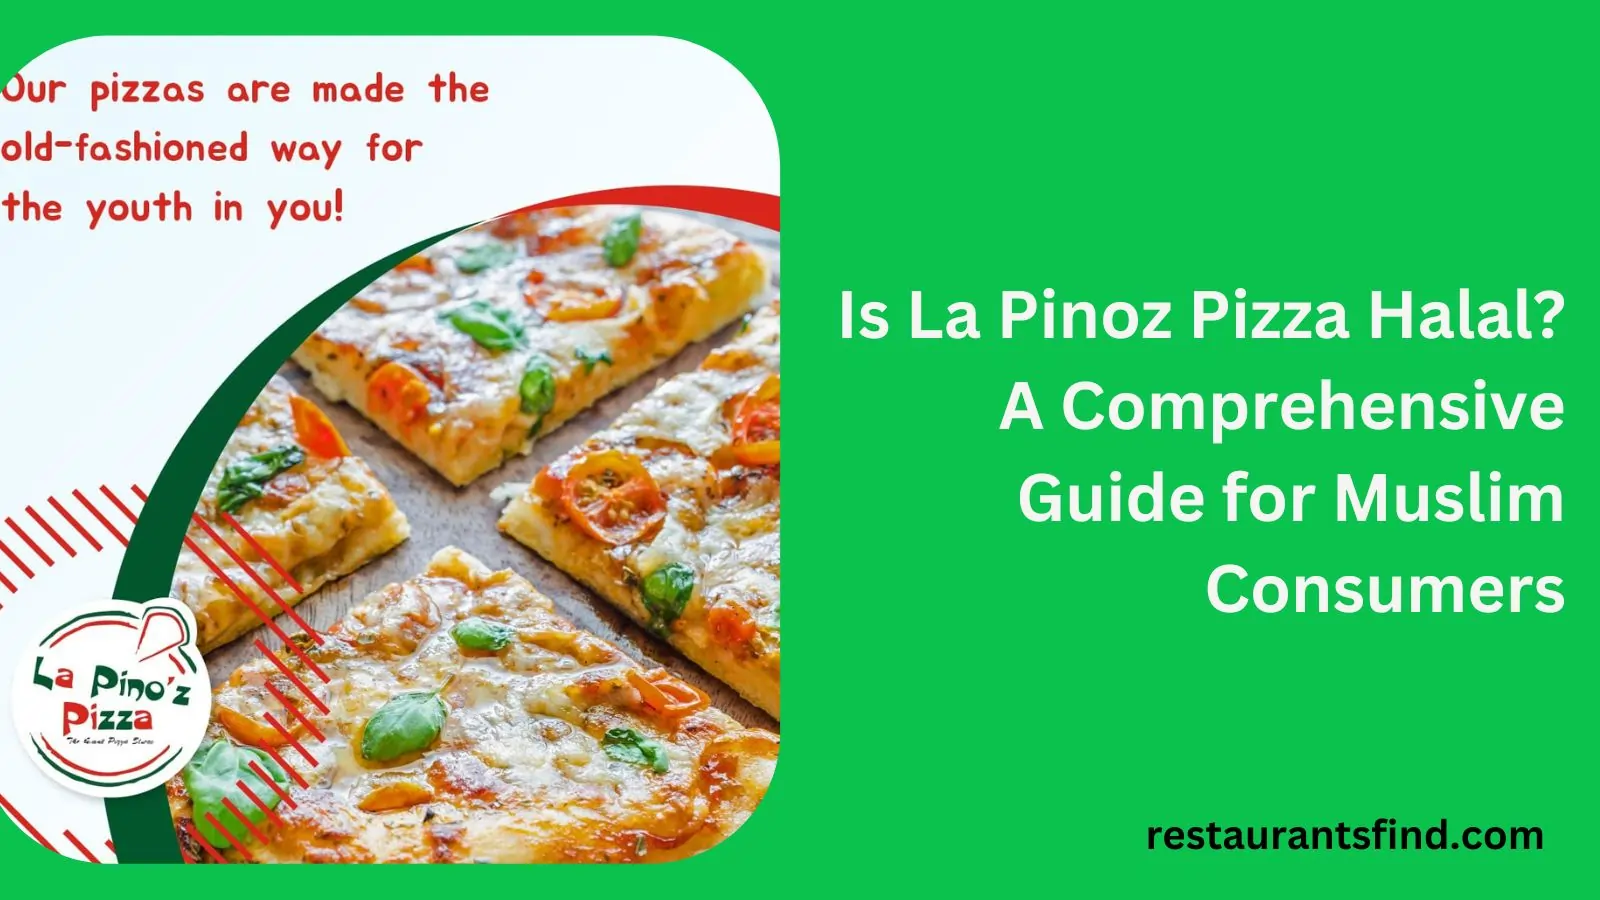 Is La Pinoz Pizza Halal? A Comprehensive Guide for Muslim Consumers